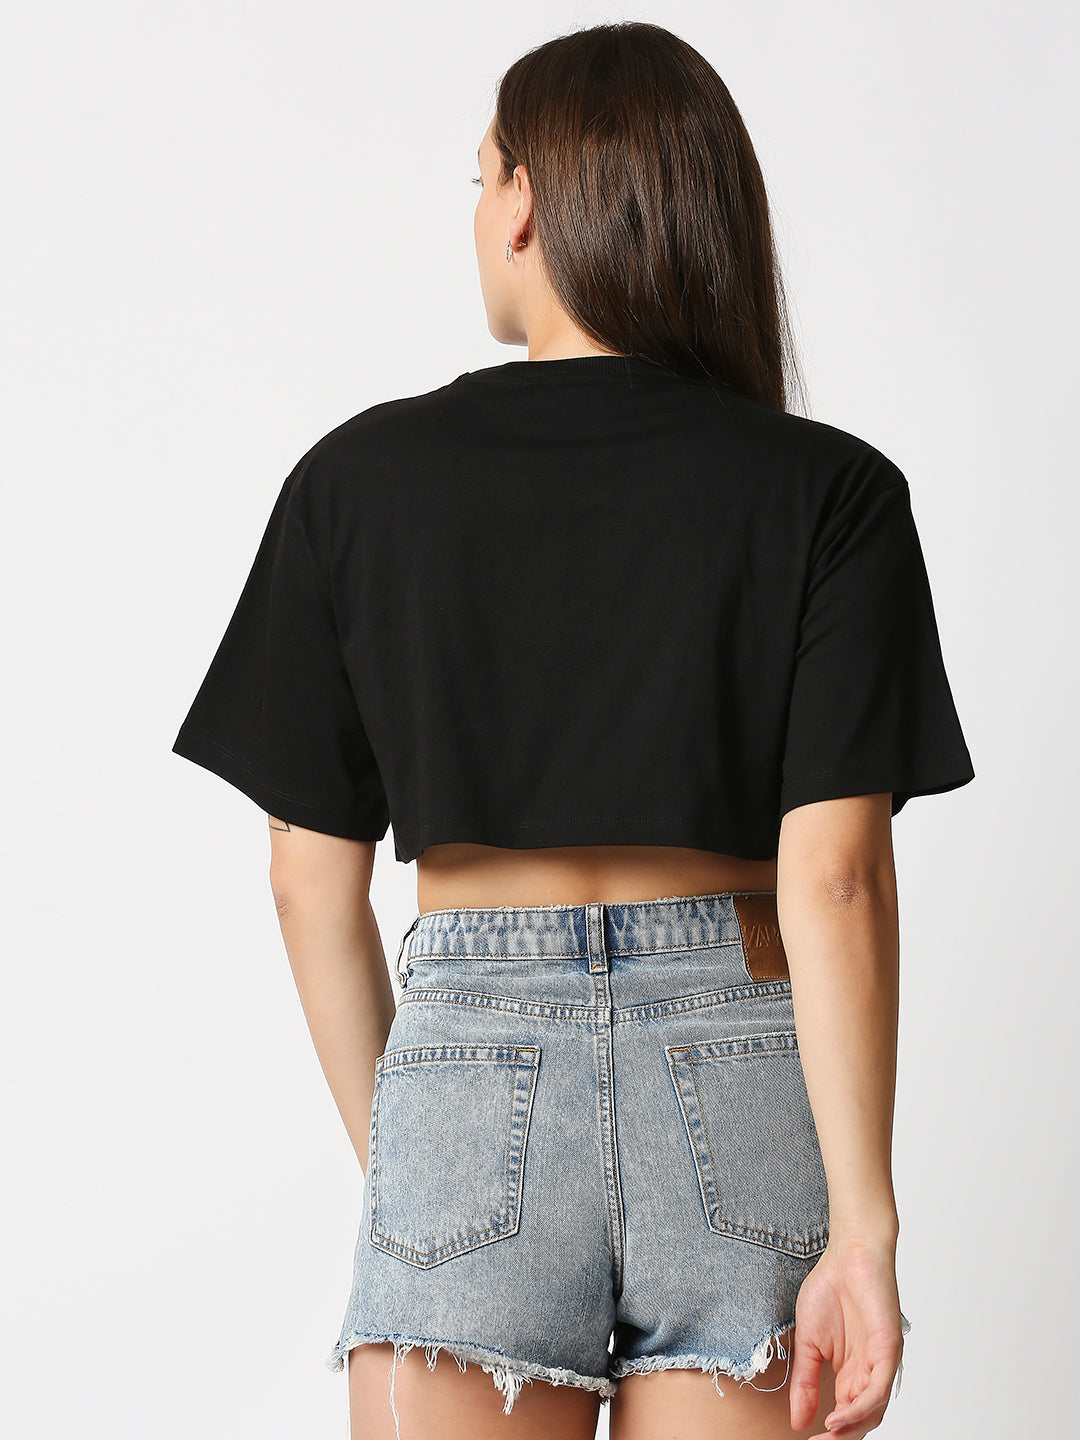 Buy Women's Crop Chest print Black T-shirt.